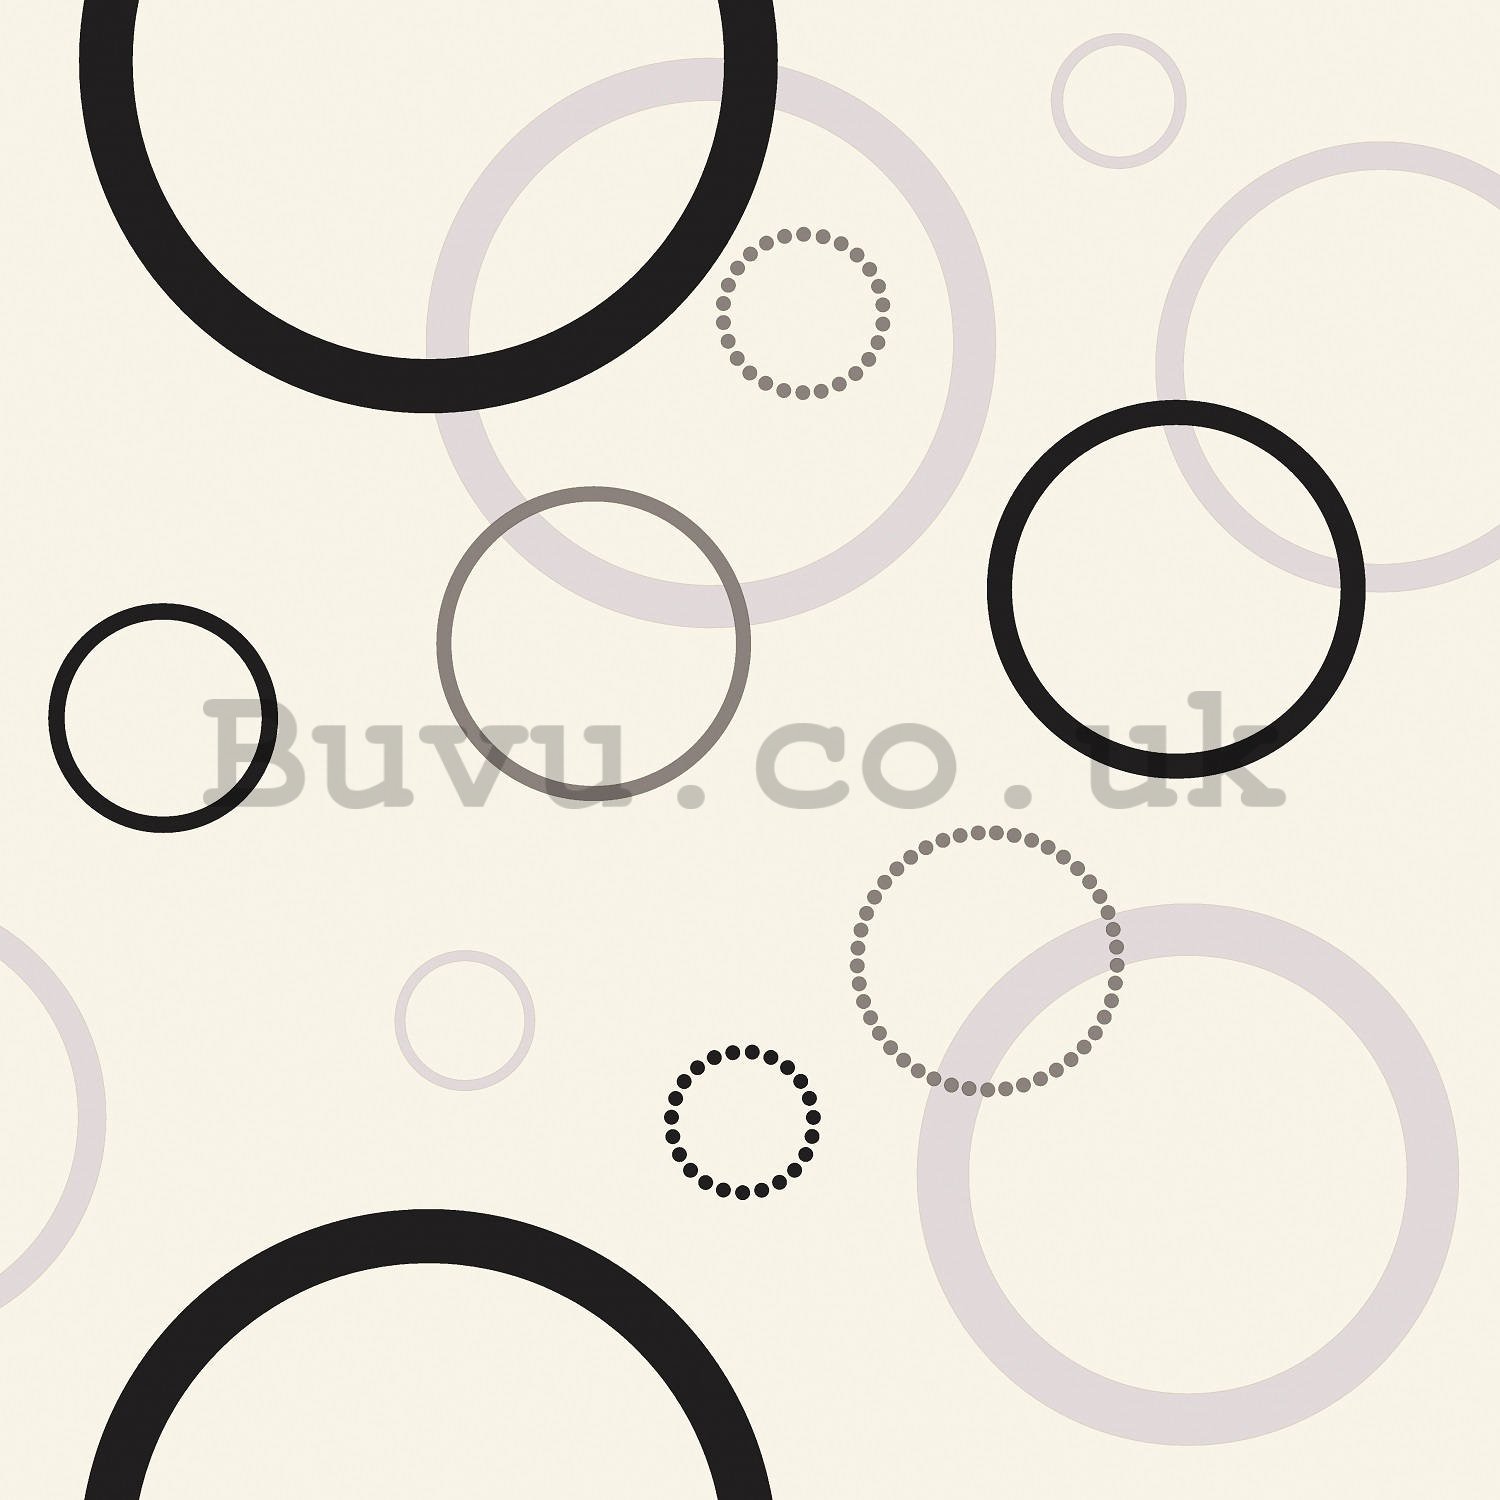 Vinyl wallpaper large gray-black circles